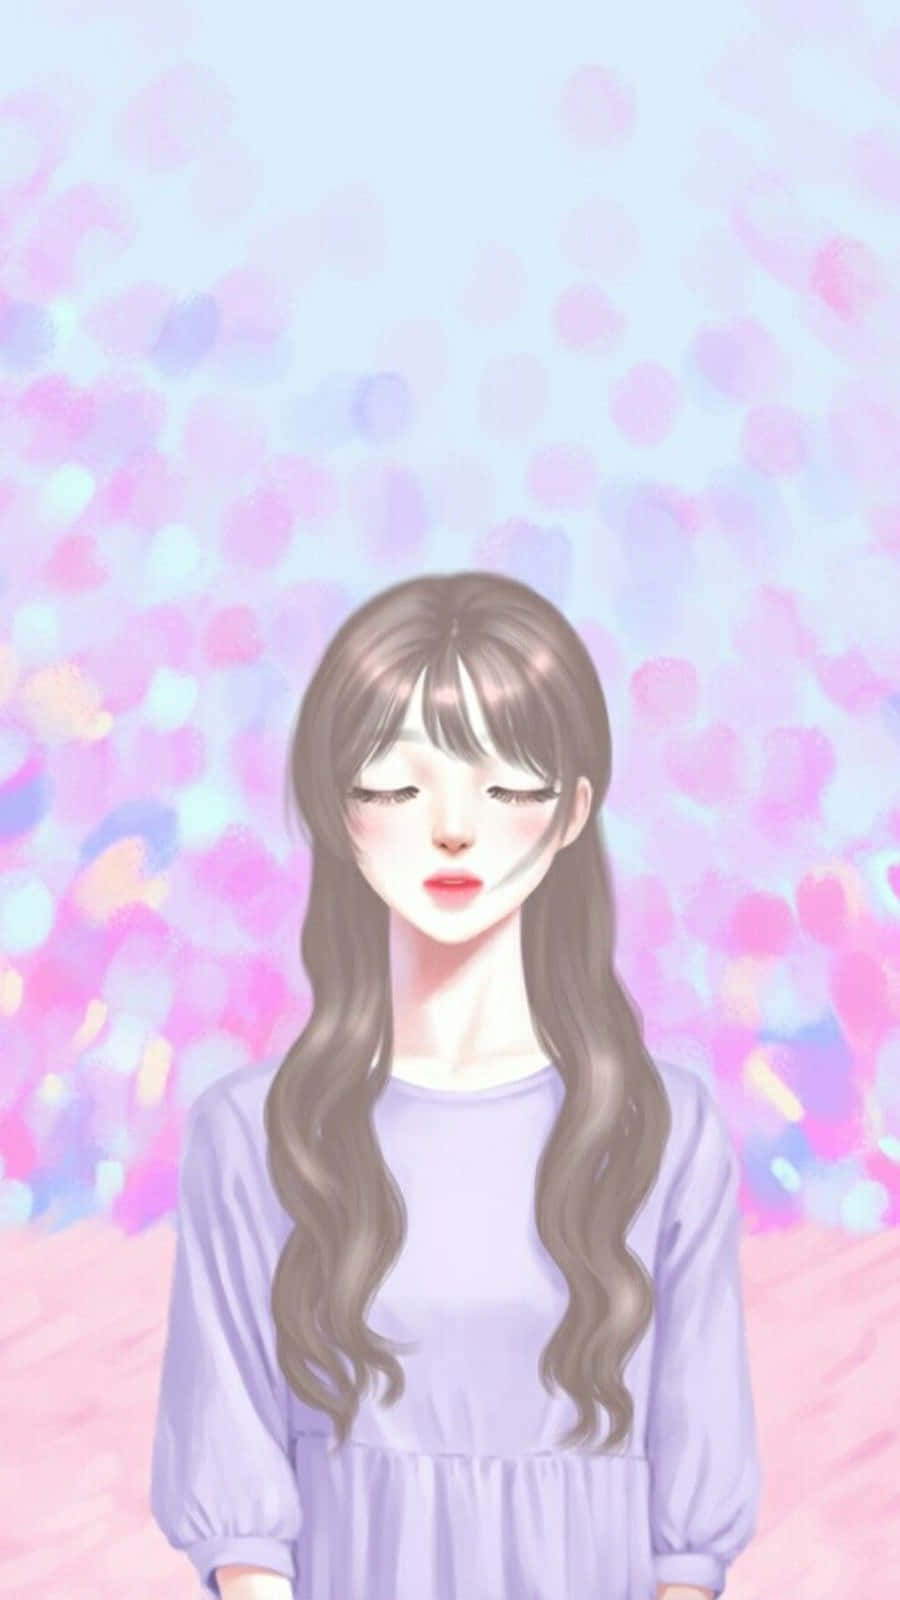 Korean Anime Girl Wearing Lavender Top